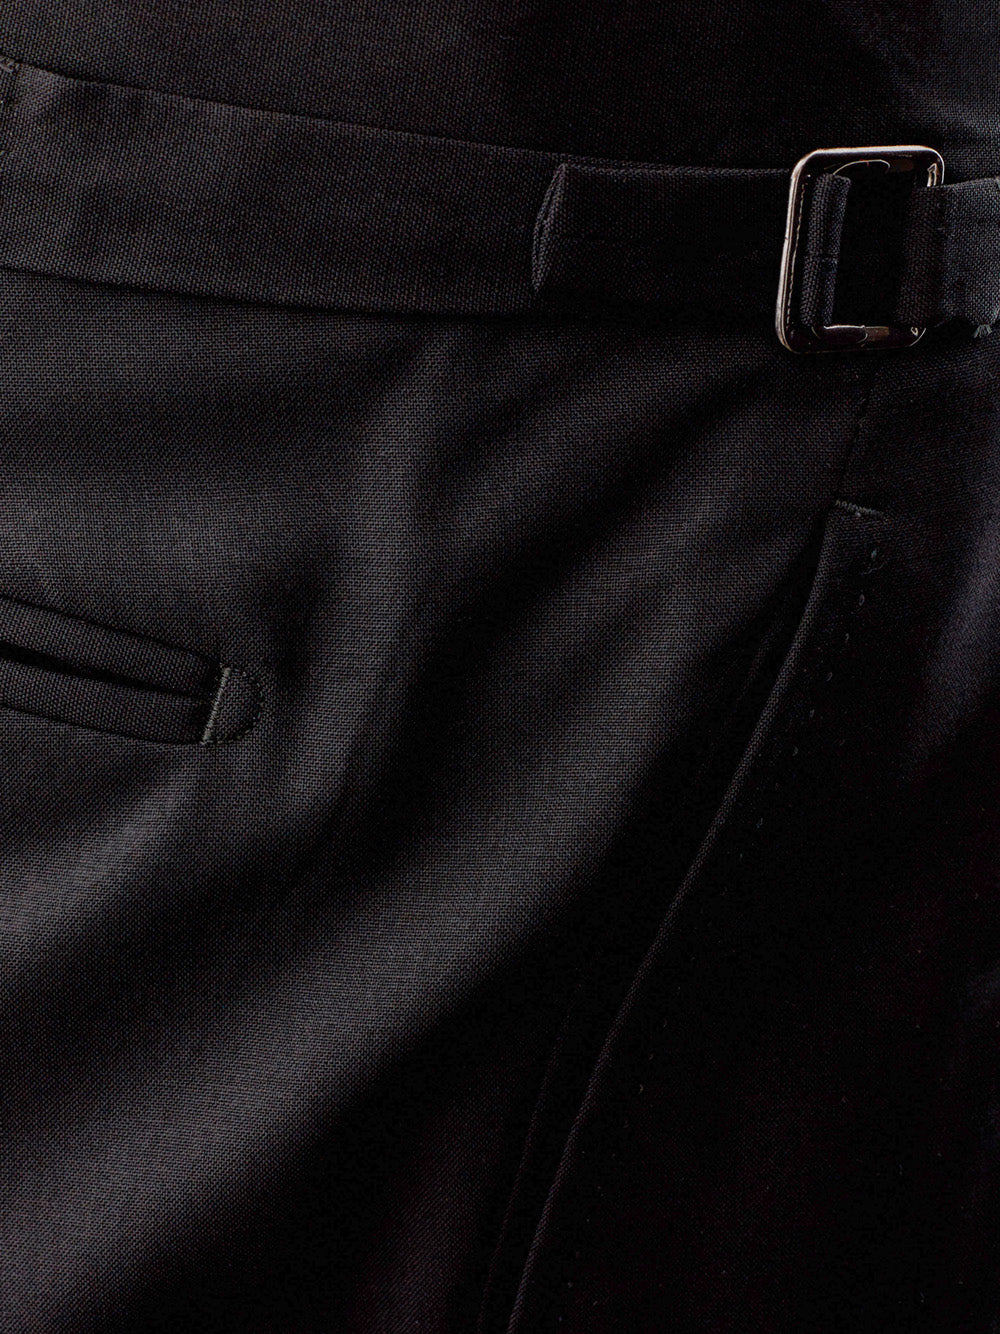 Tom Ford Black Wool Elegant Trousers